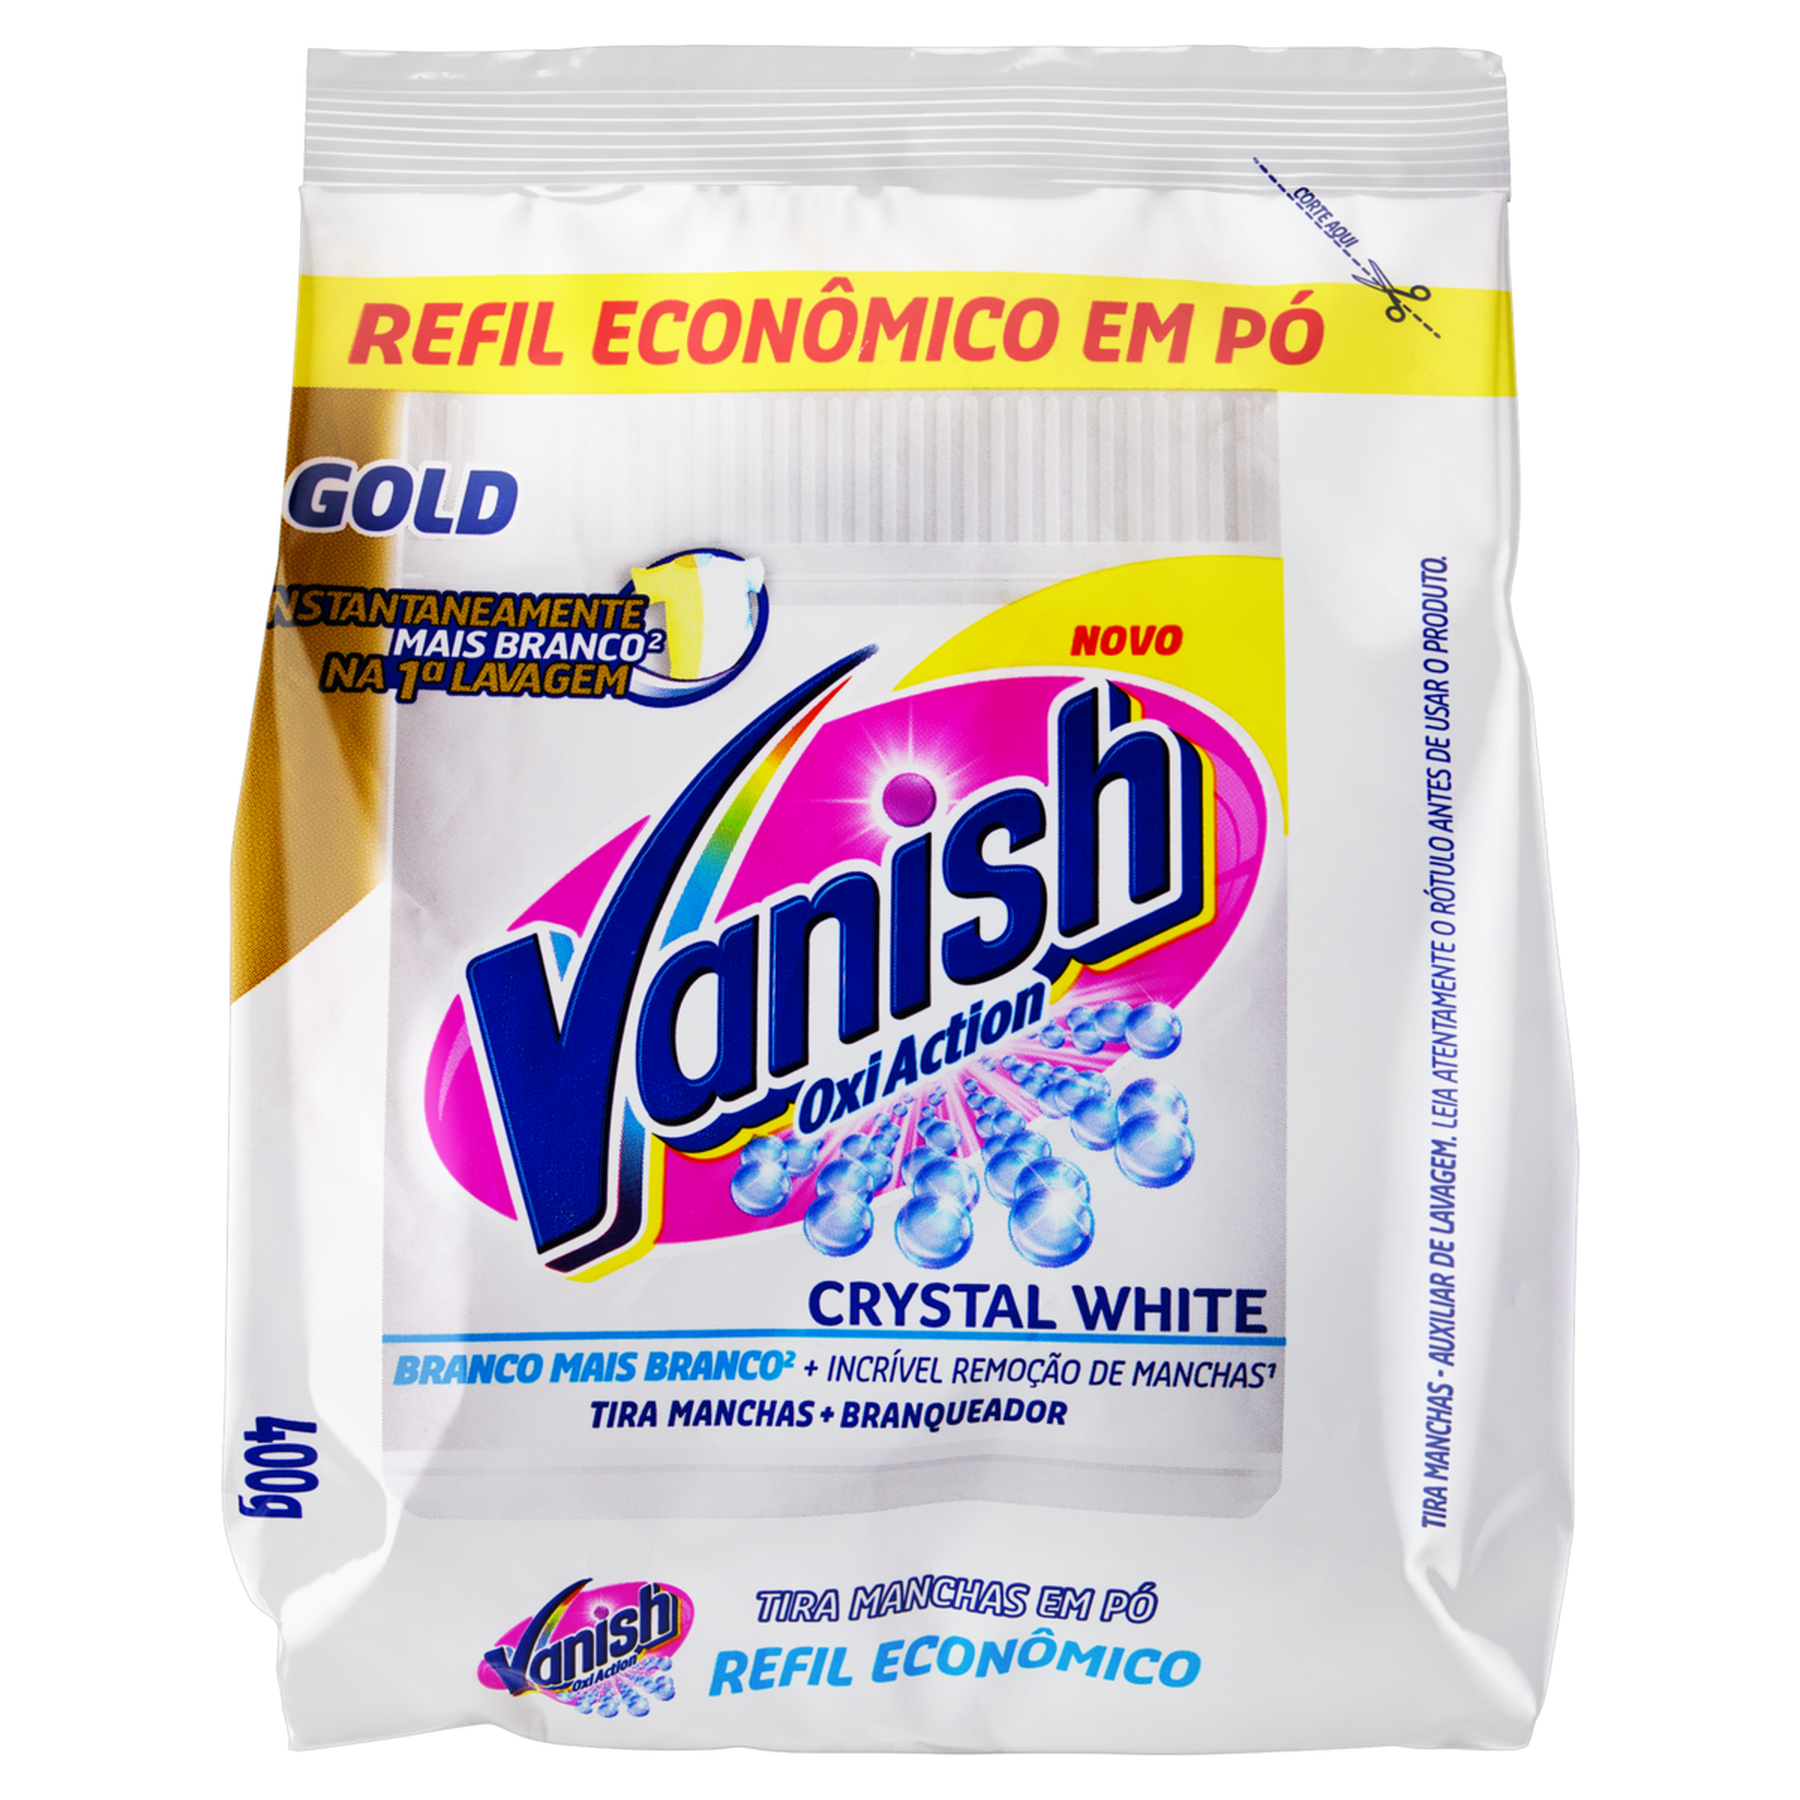 Tira-Manchas em Pó Branqueador Vanish Oxi Action Crystal White Pacote 400g Refil Econômico